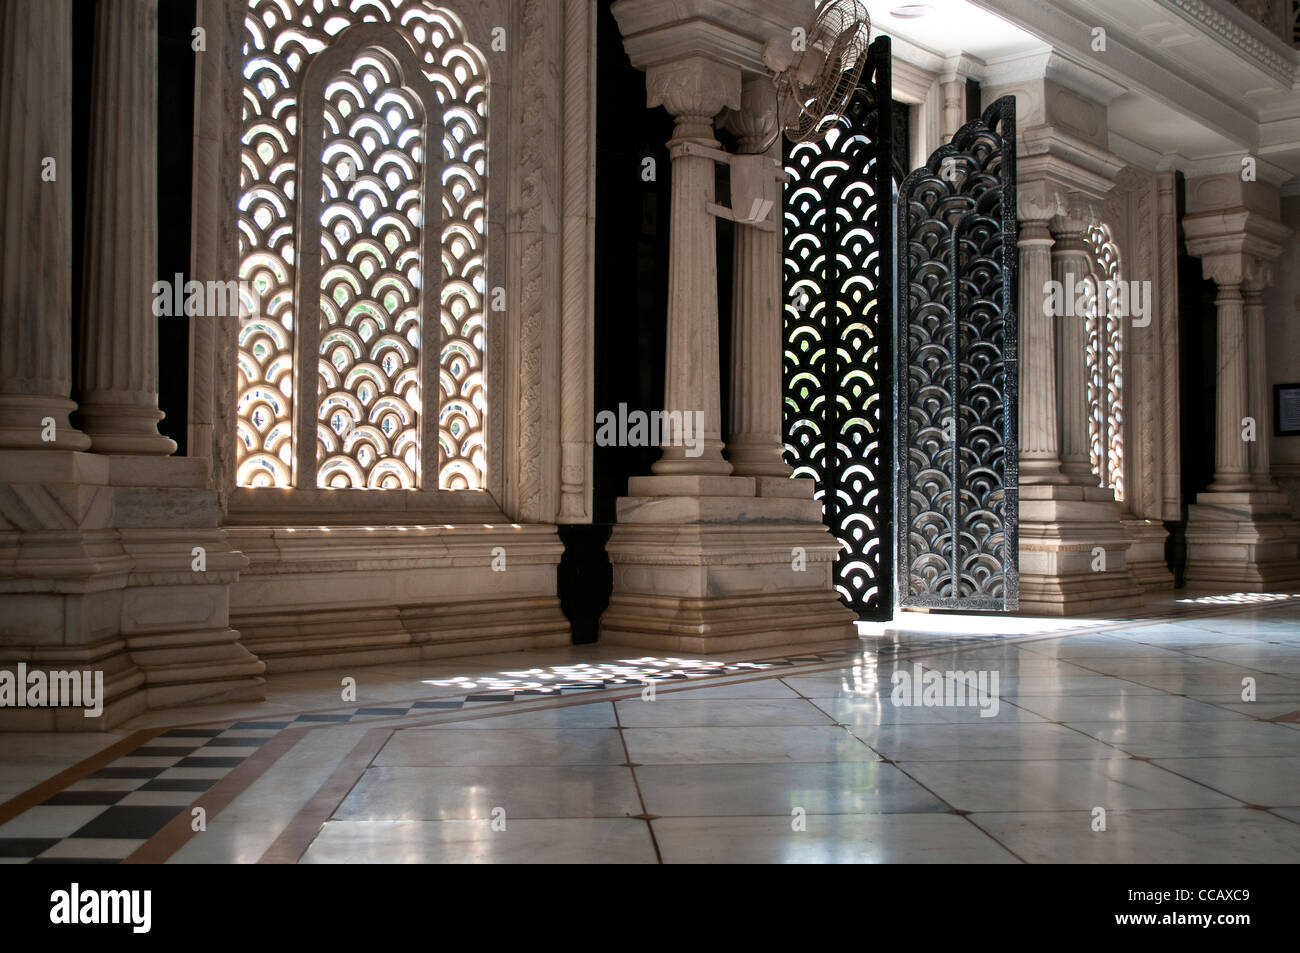 Portes et fenêtres grillagées dans le mausolée en marbre, Krishna, Krishna Balaram Mandir, Vrindavan, Inde Banque D'Images